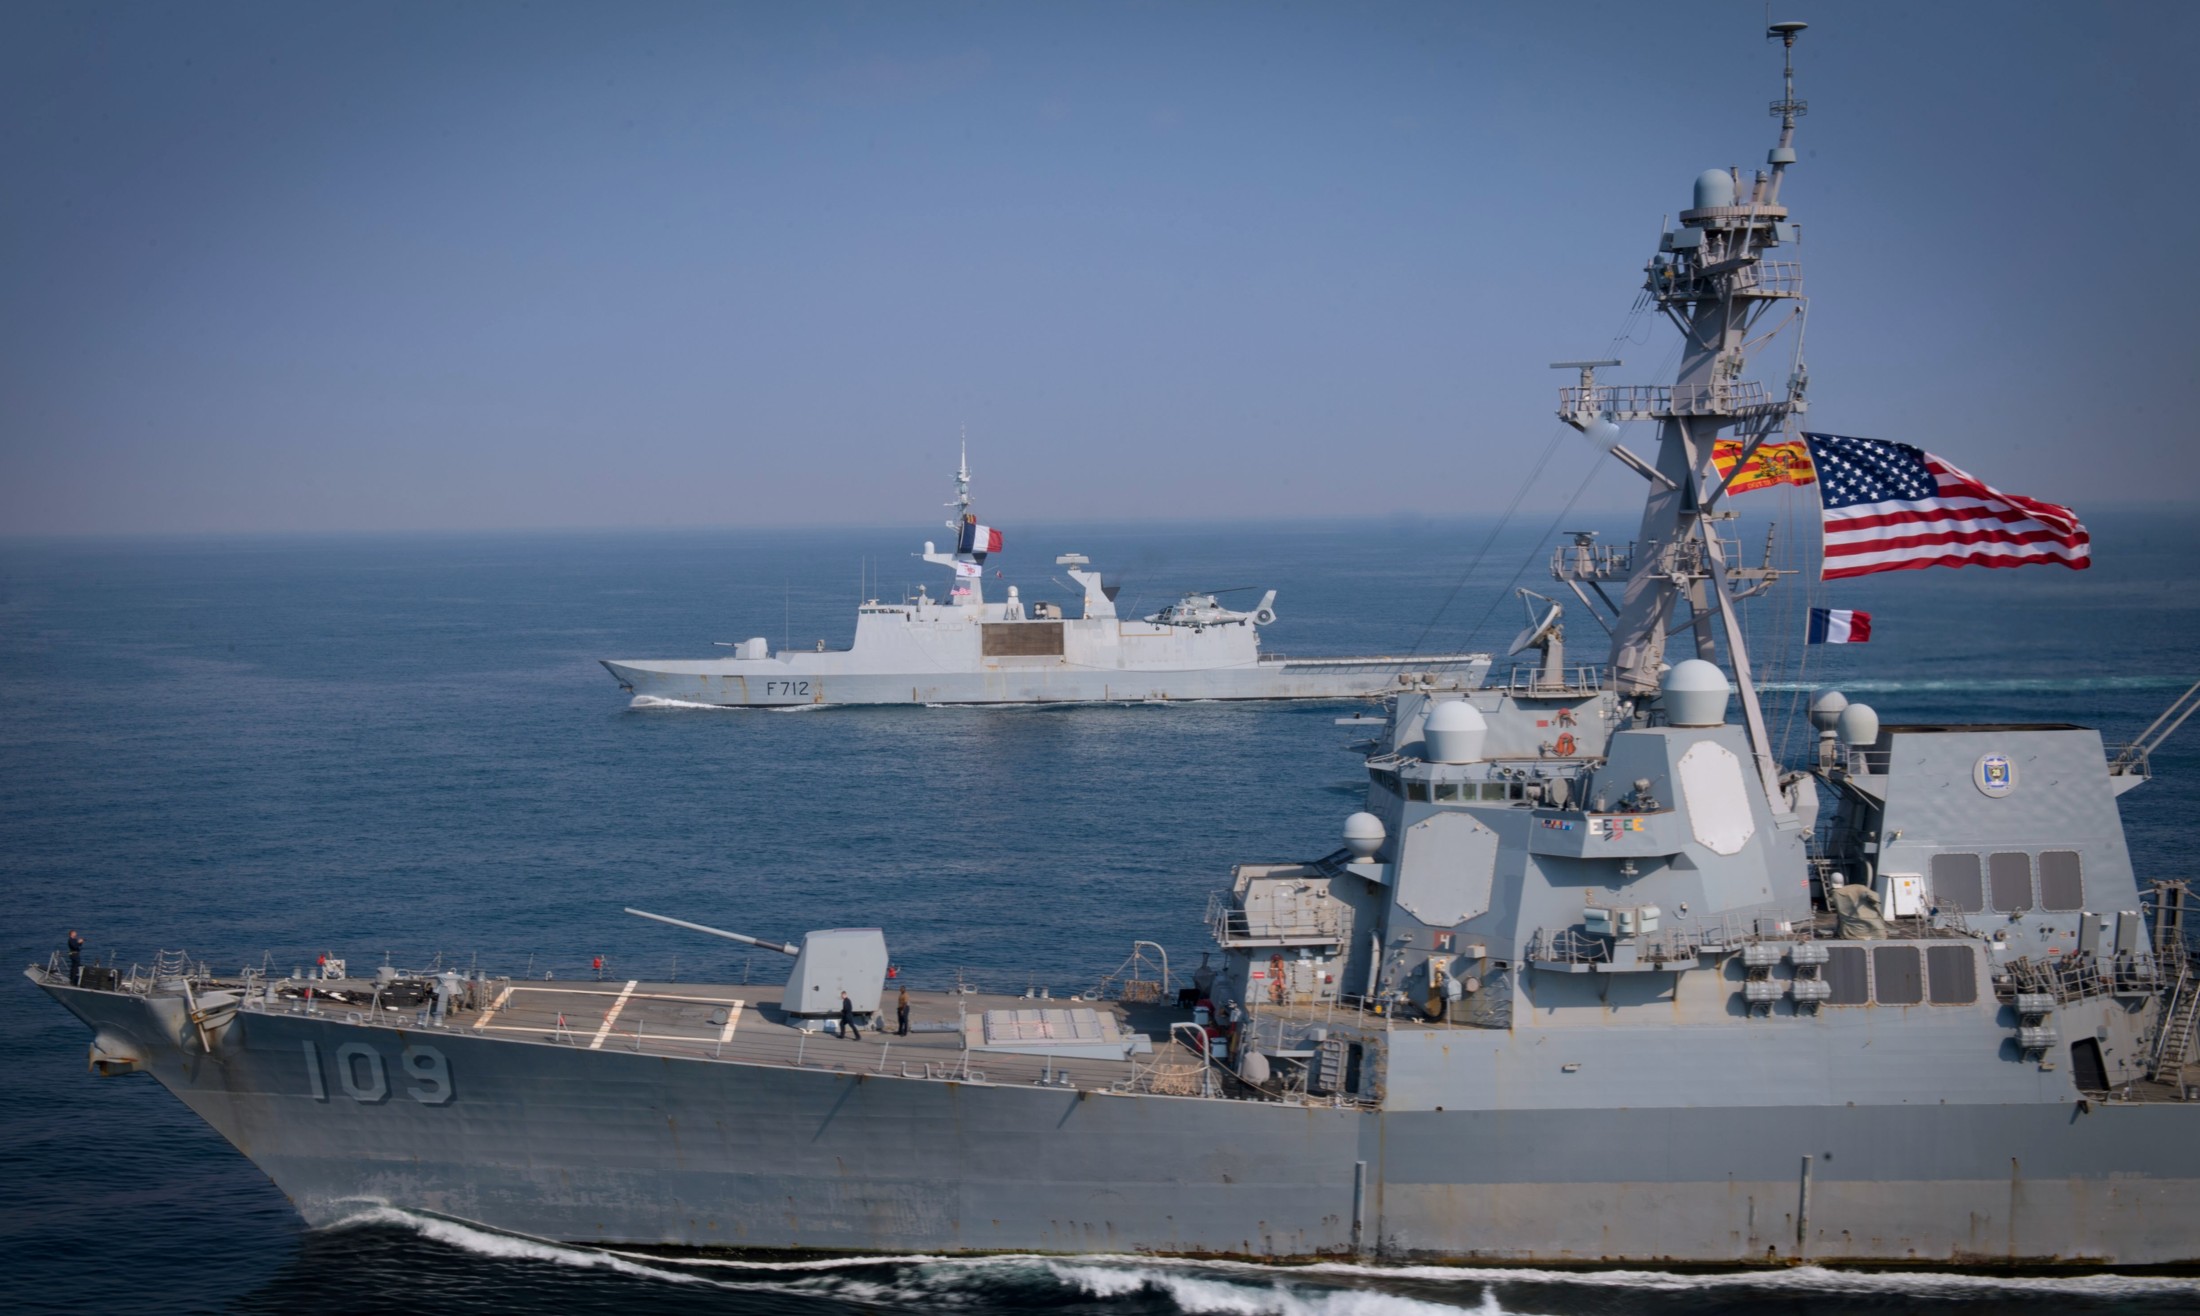 ddg-109 uss jason dunham arleigh burke class guided missile destroyer aegis us navy 53